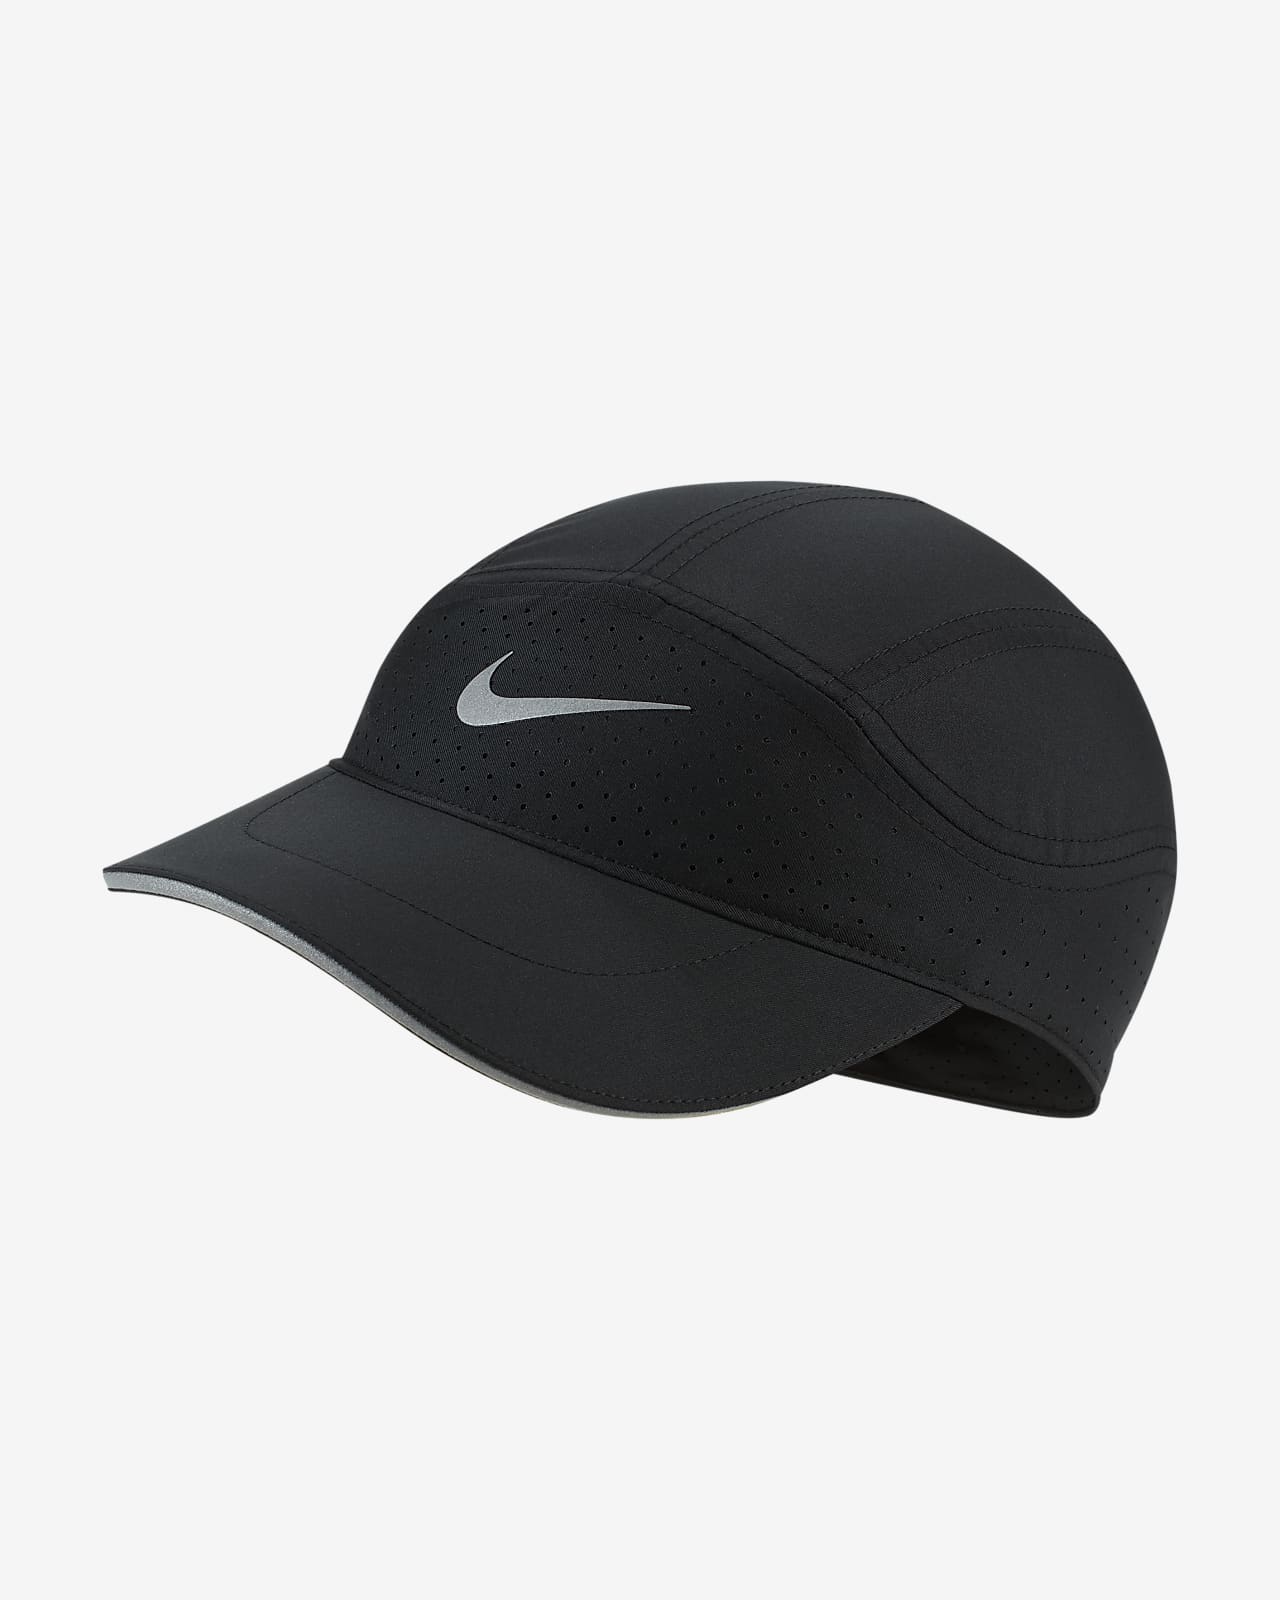 Nike AeroBill Tailwind Running Cap. Nike DK